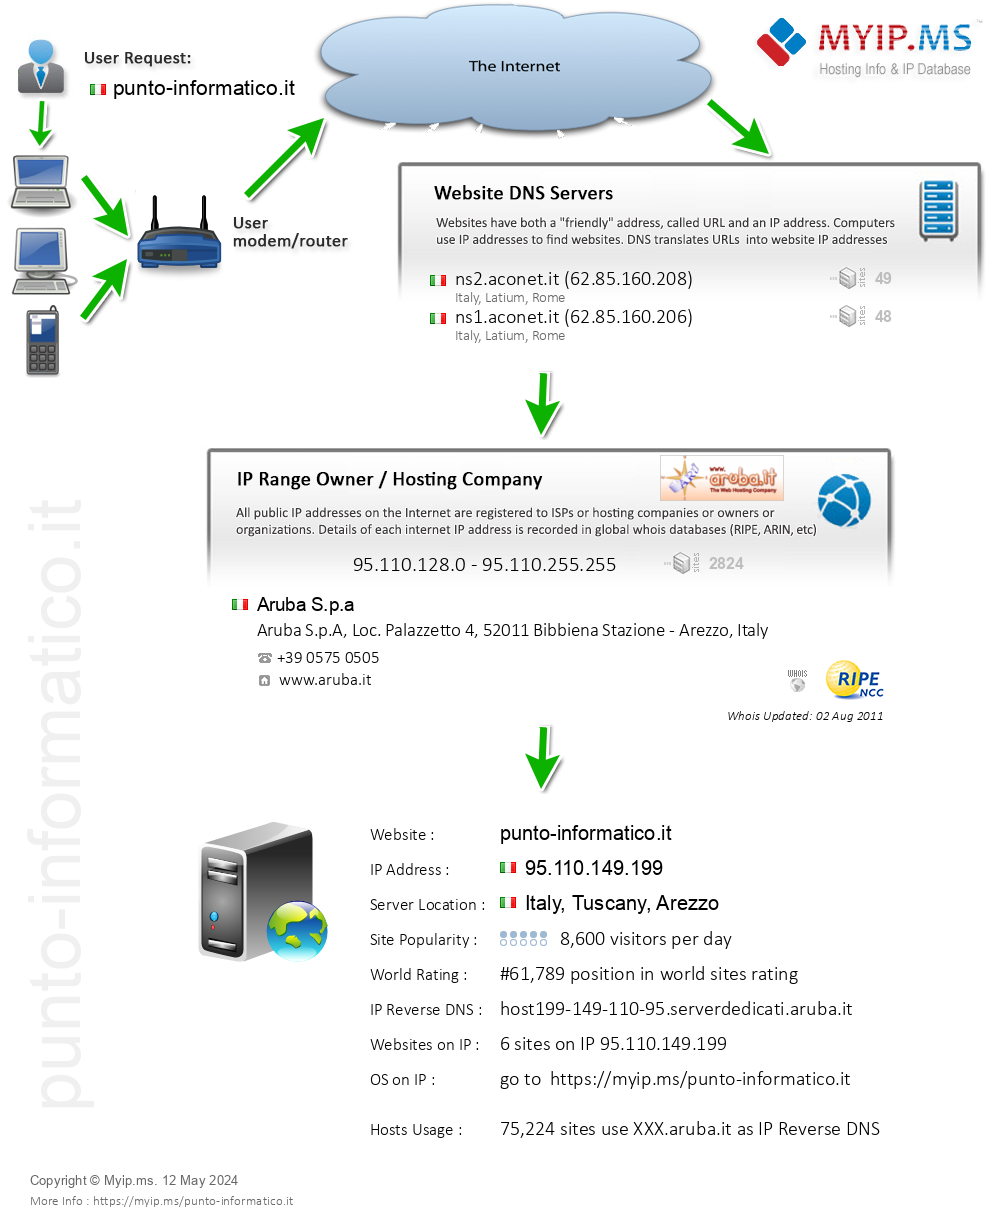 Punto-informatico.it - Website Hosting Visual IP Diagram